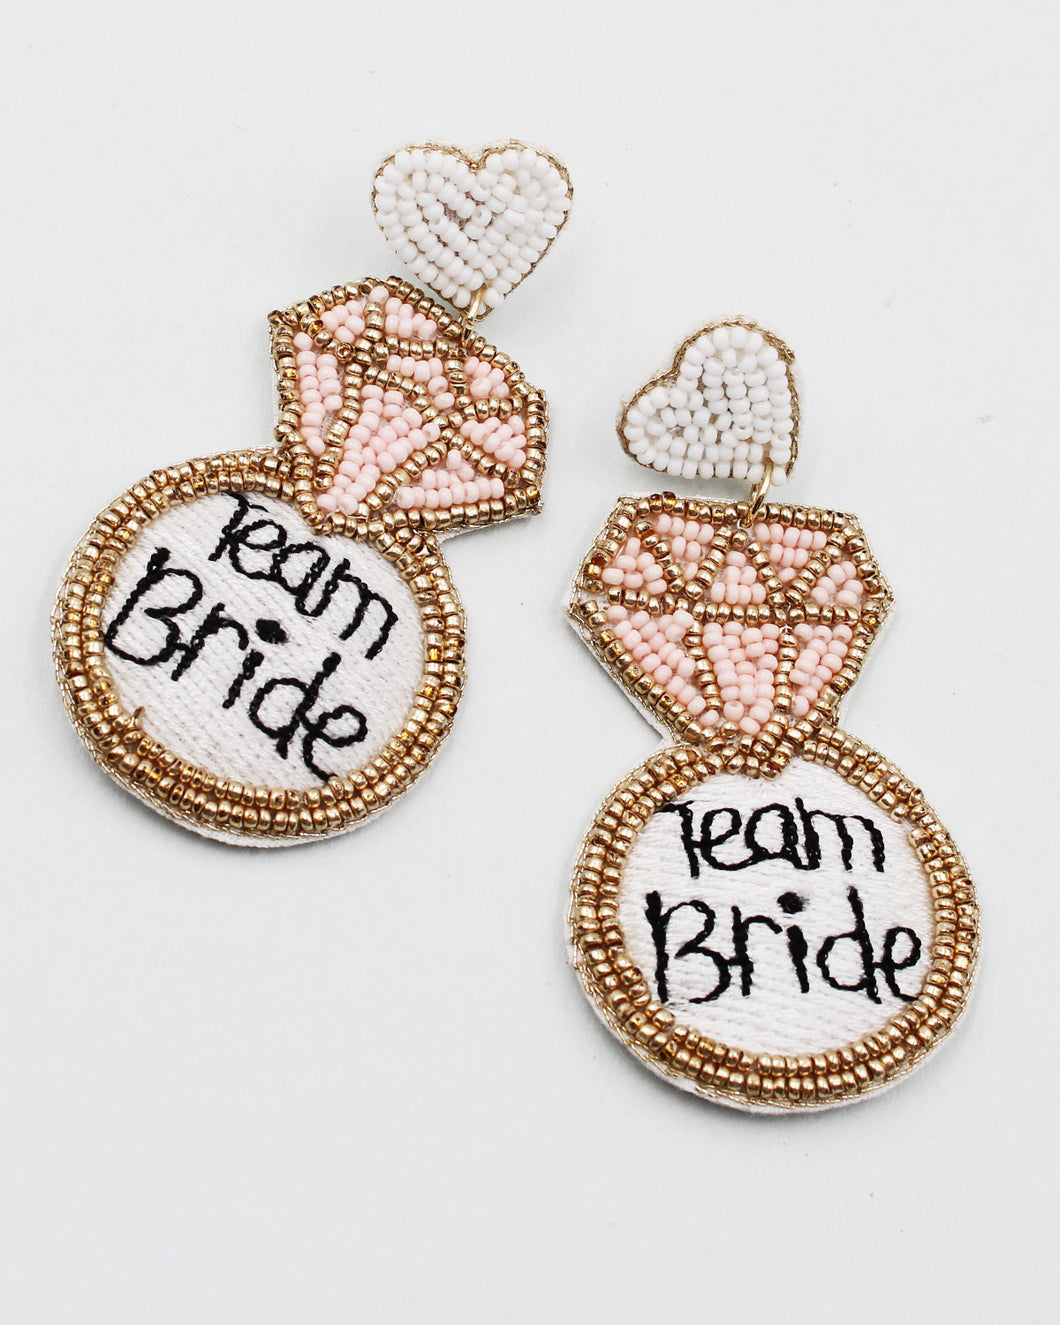 'TEAM BRIDE' Beaded Bottle Earrings